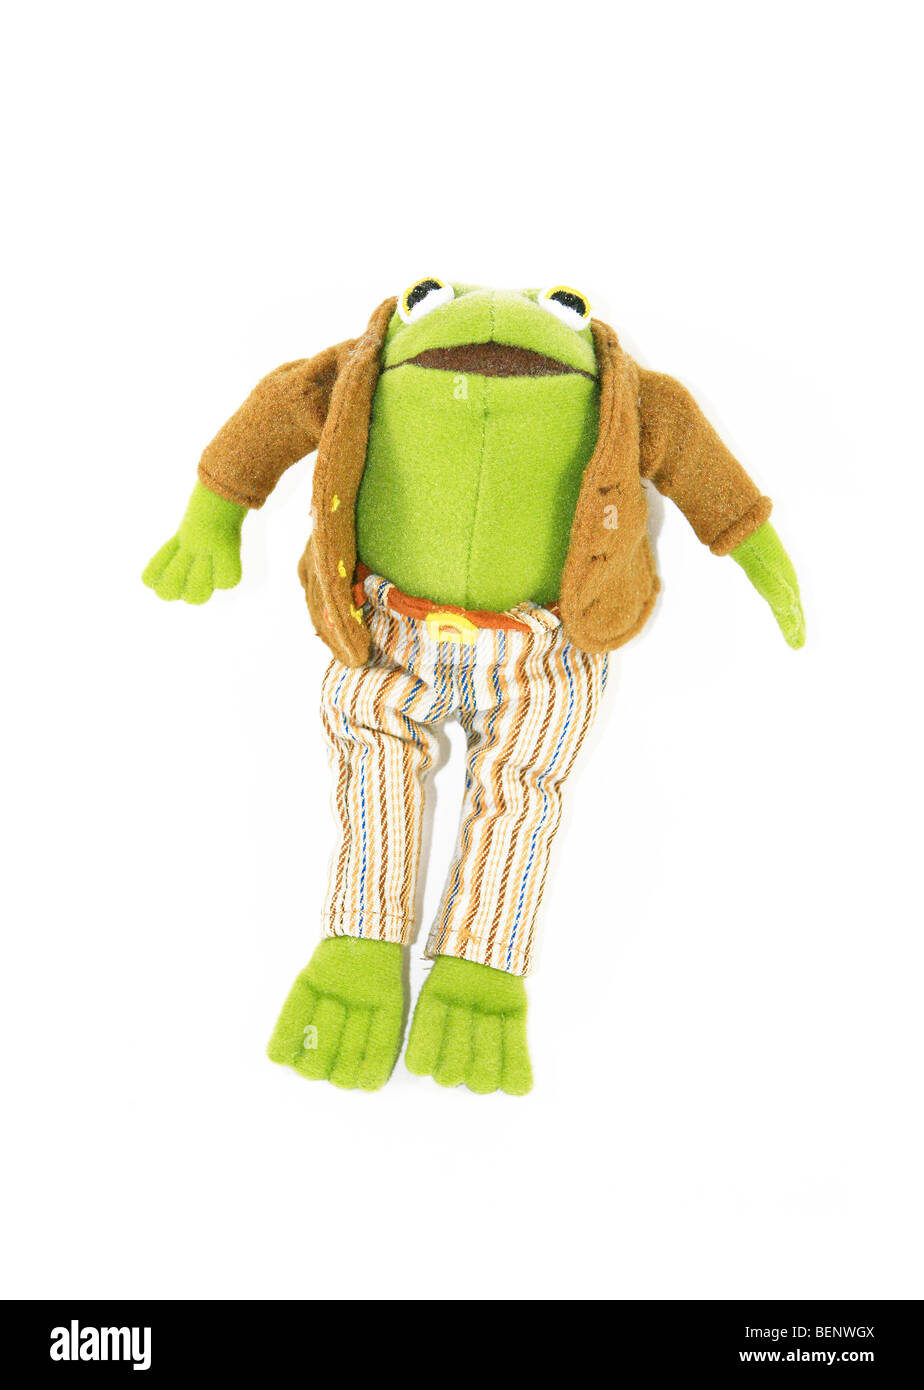 https://c8.alamy.com/comp/BENWGX/mr-toad-stuffed-soft-toy-frog-based-on-the-popular-childrens-book-BENWGX.jpg